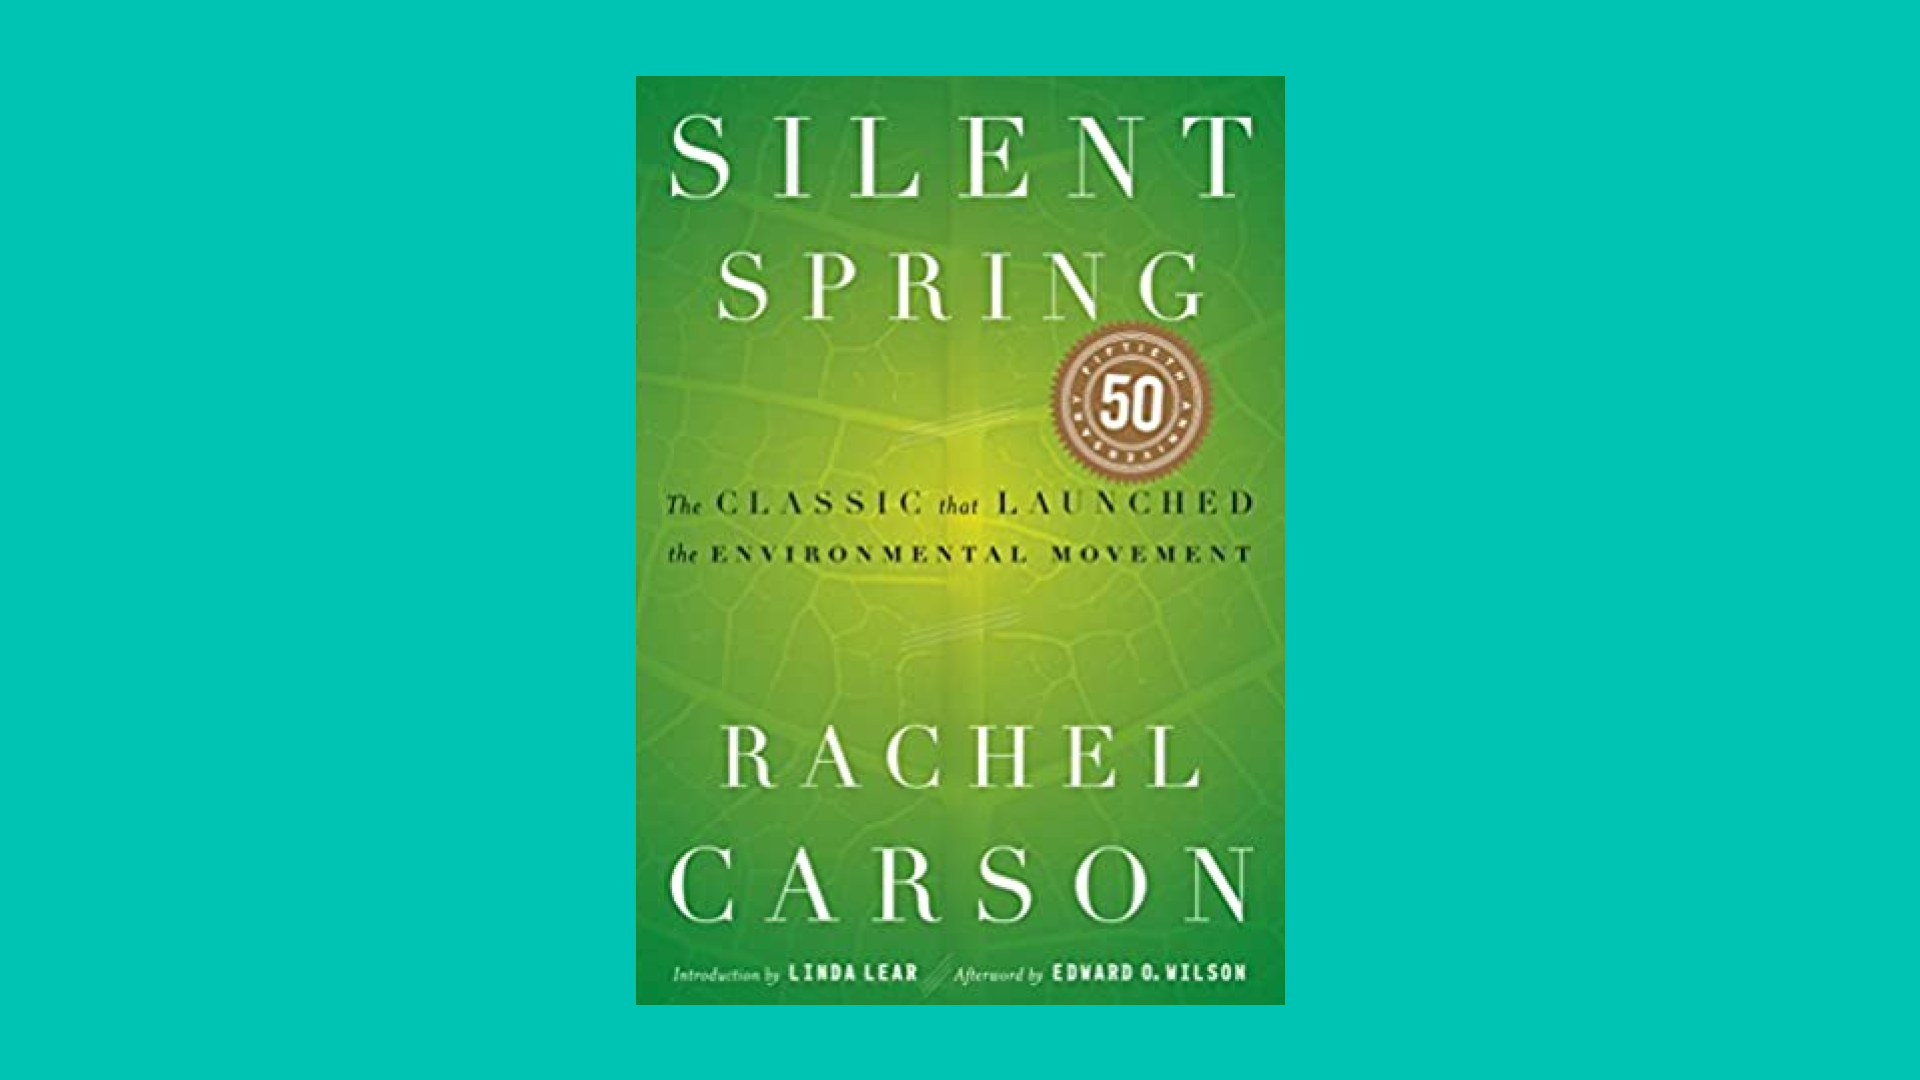 “Silent Spring” by Rachel Carson